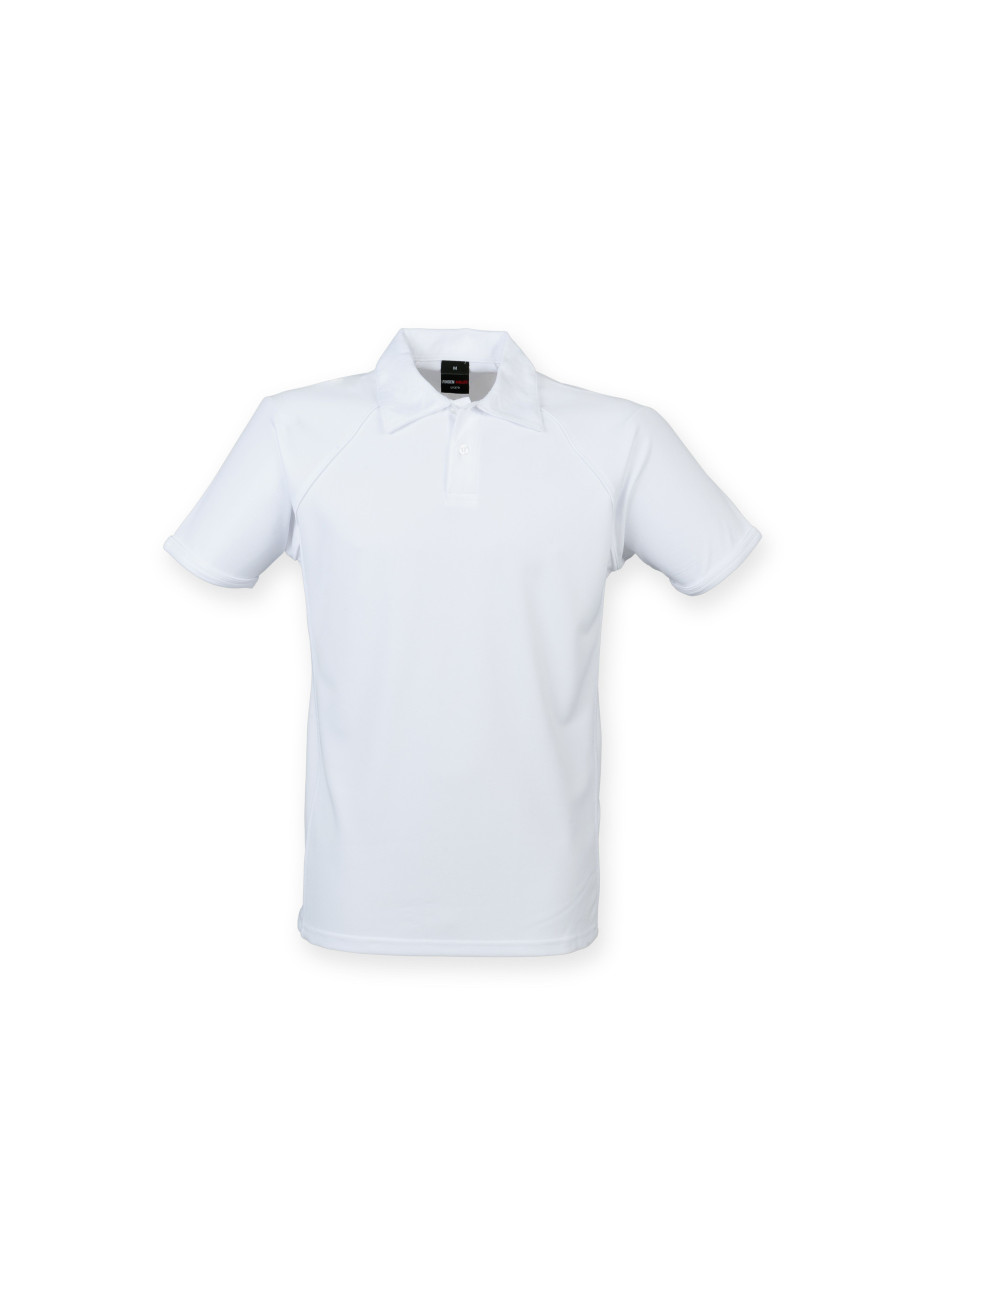 Finden & Hales LV370 - polo transpirable cool plus®  Colores:Blanc